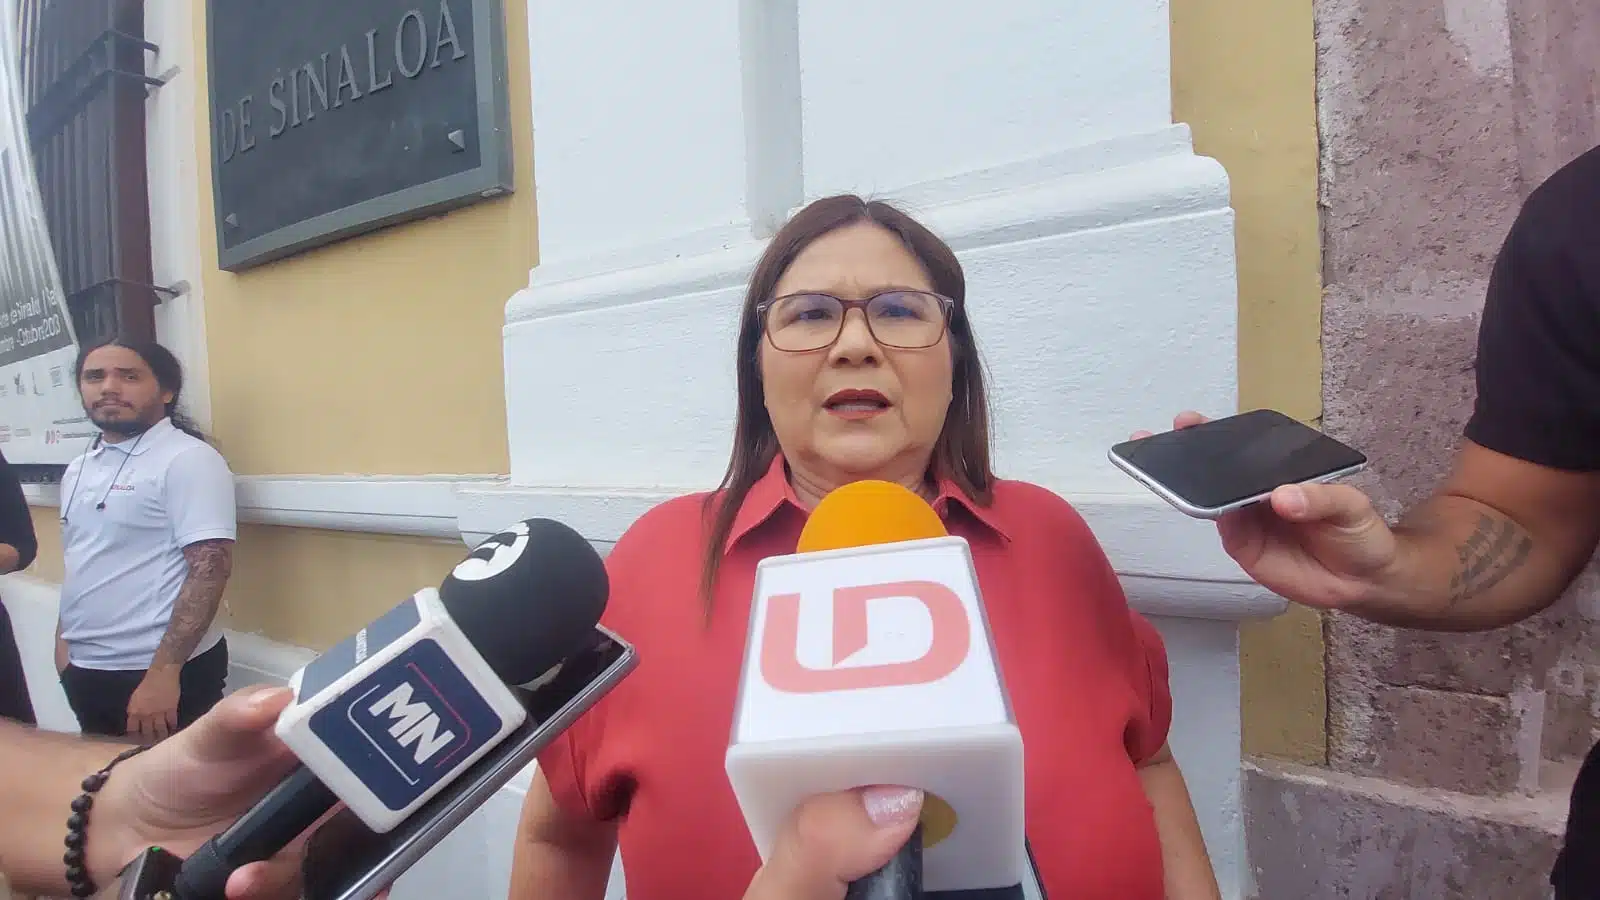 Senadora sinaloense de la República por Morena, Imelda Castro Castro